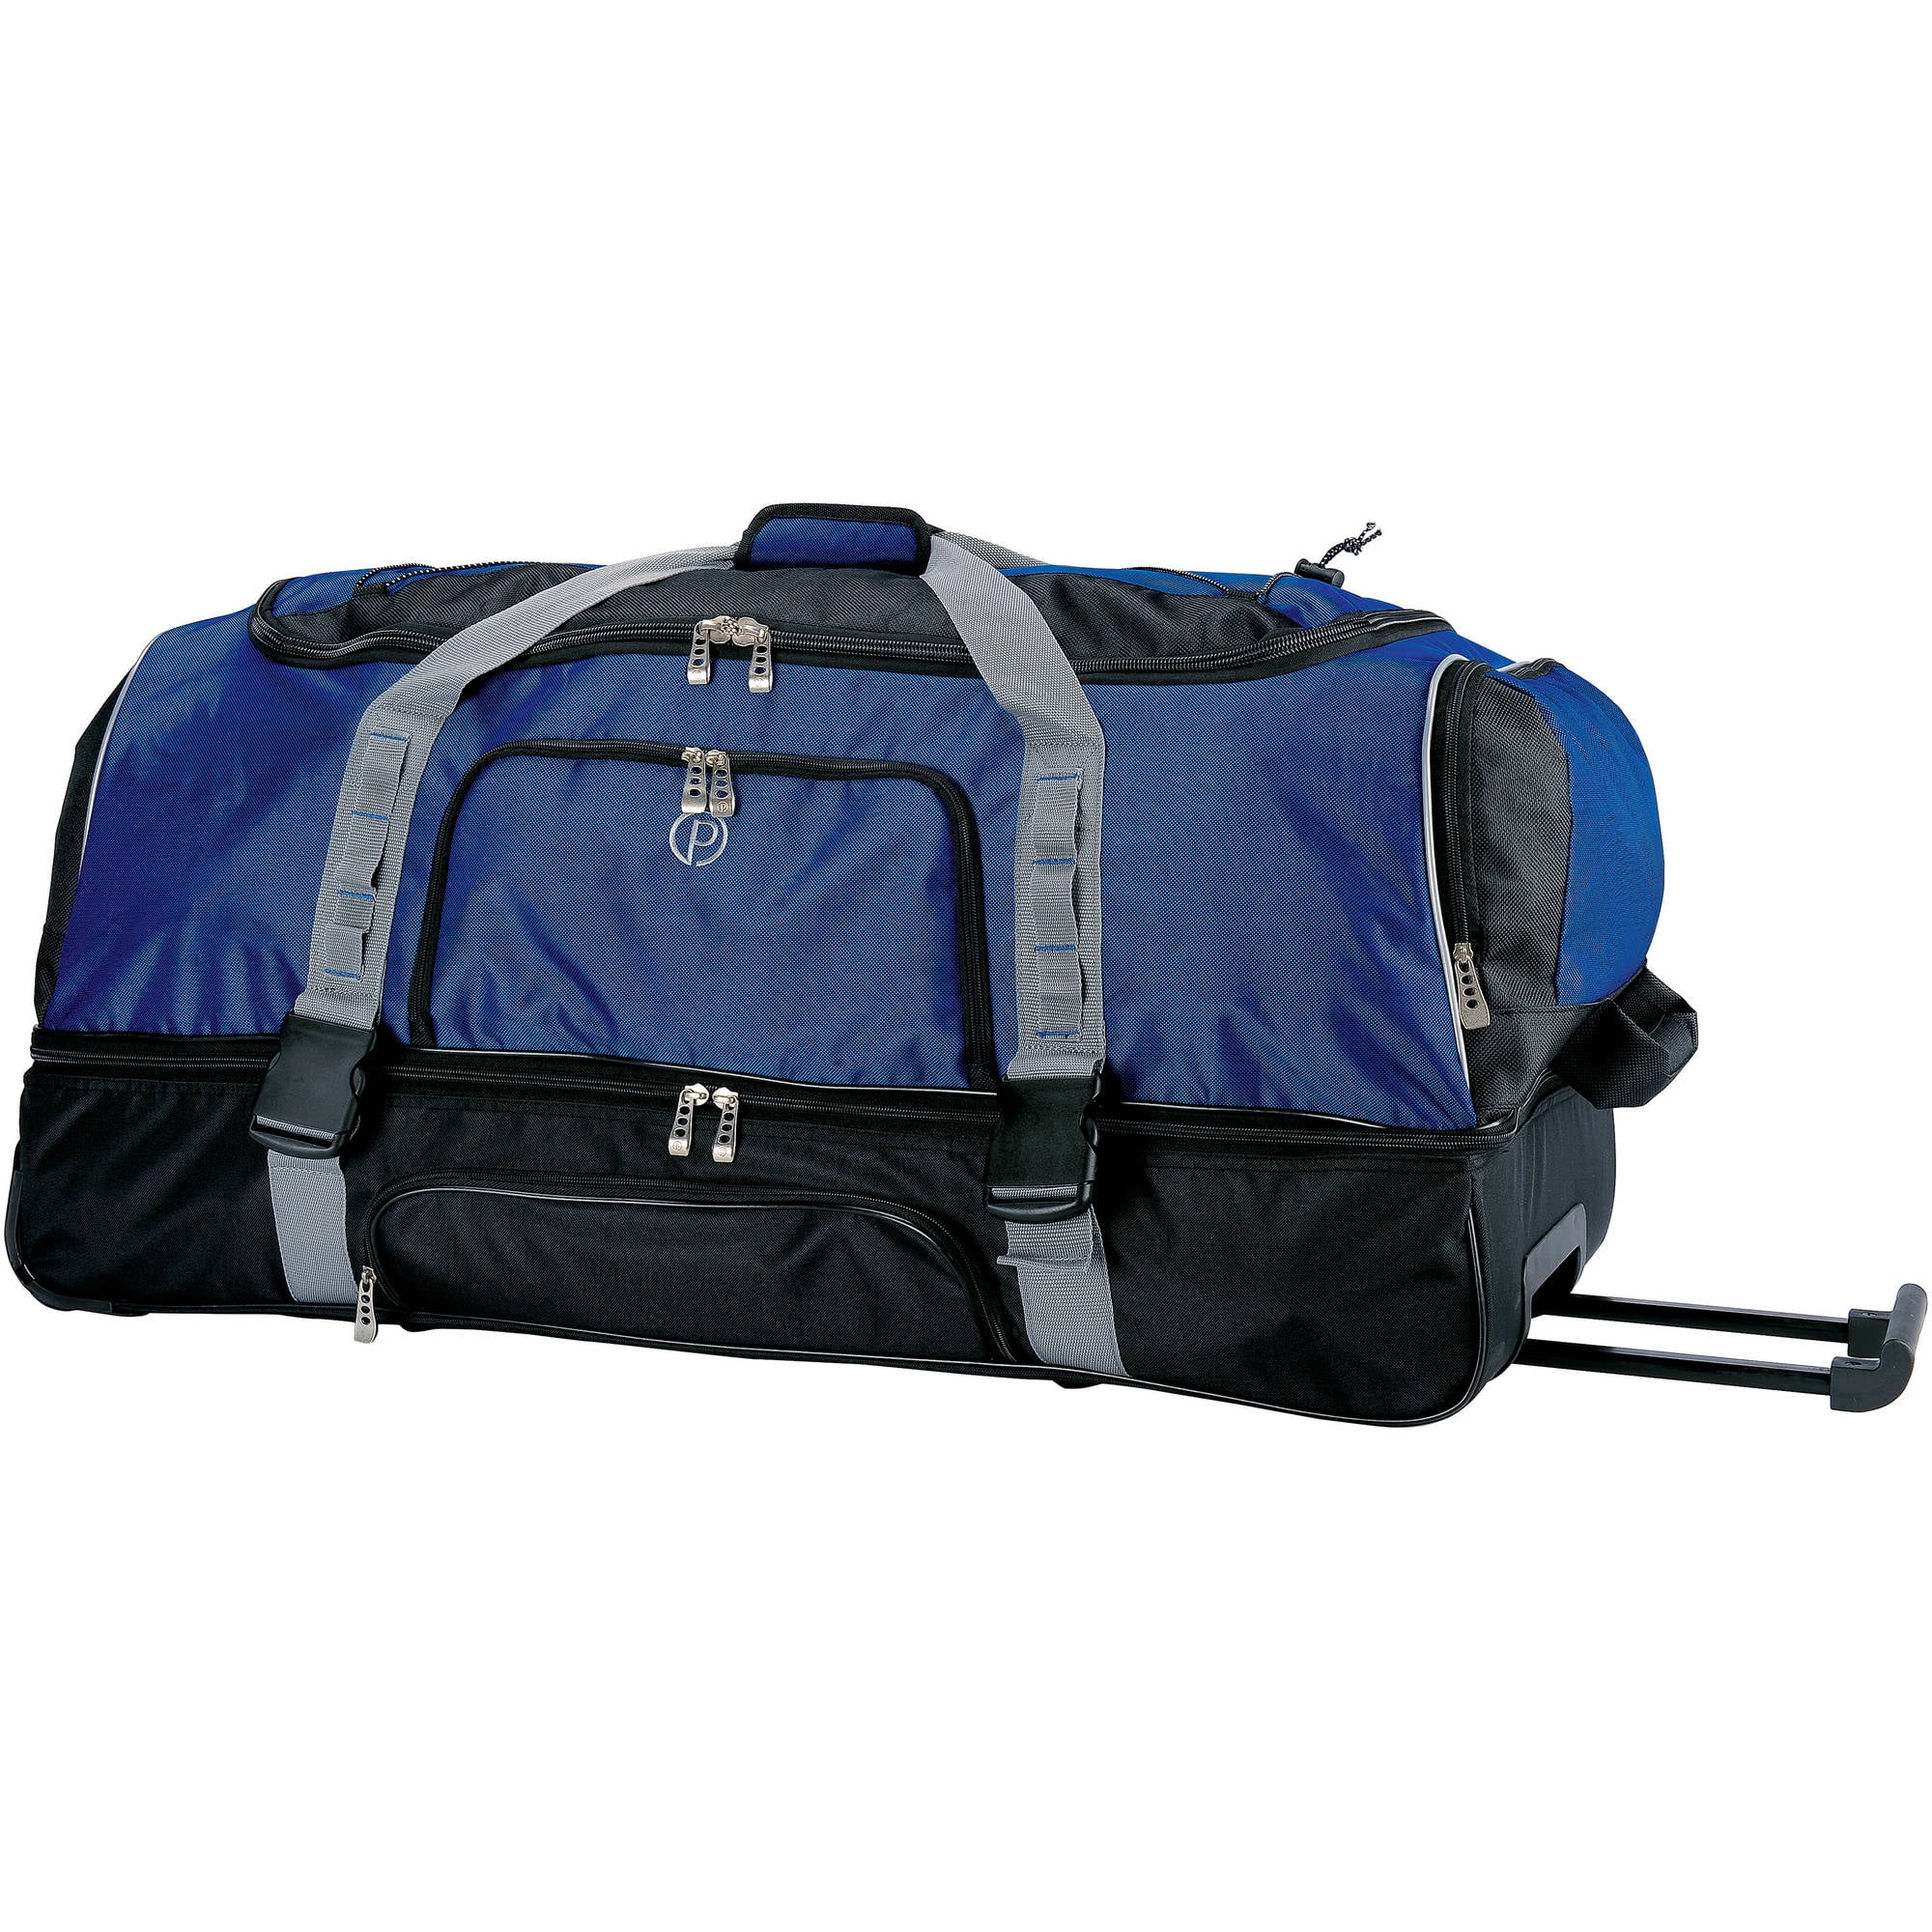 Rolling Bag Duffel Luggage Wheel Duffle Carry Drop Bottom Suitcase Travel Black